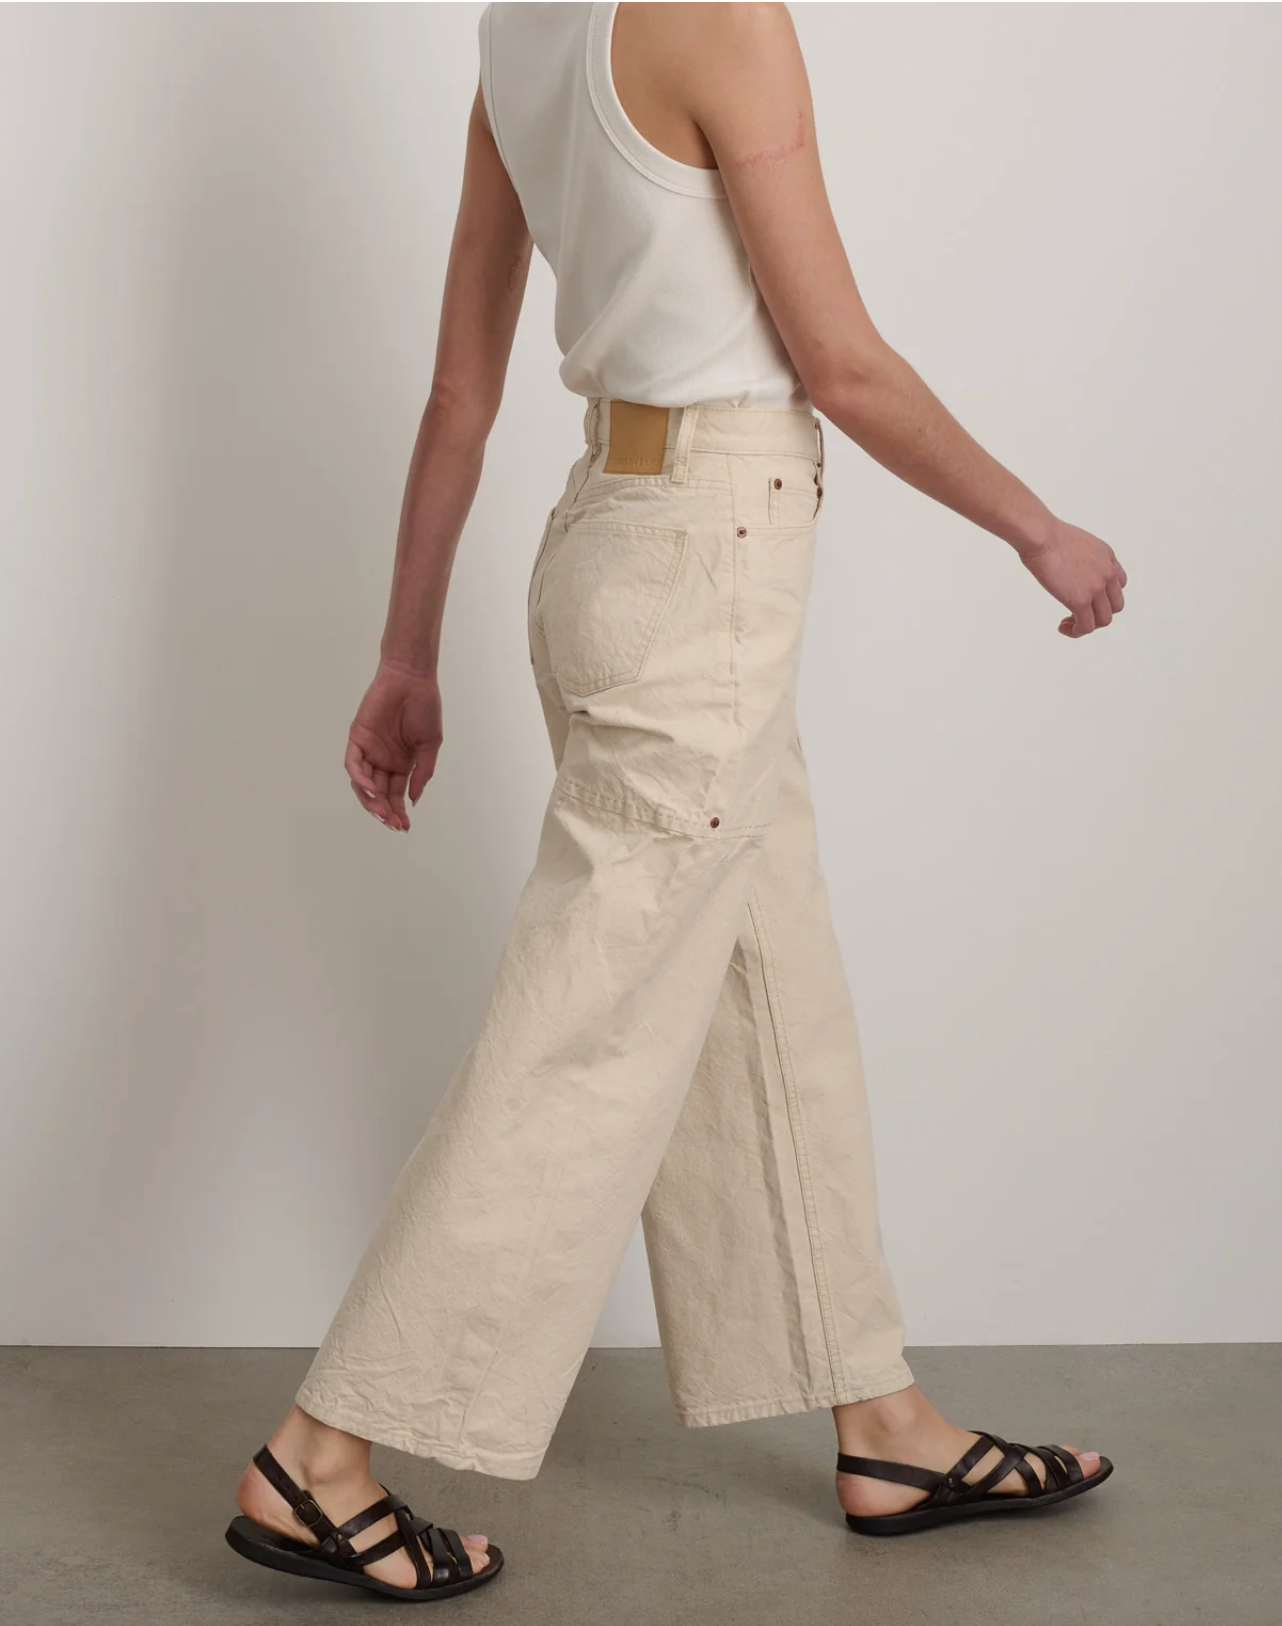 B Sides - Elissa Patch Pocket Mere White Jeans - Image 3